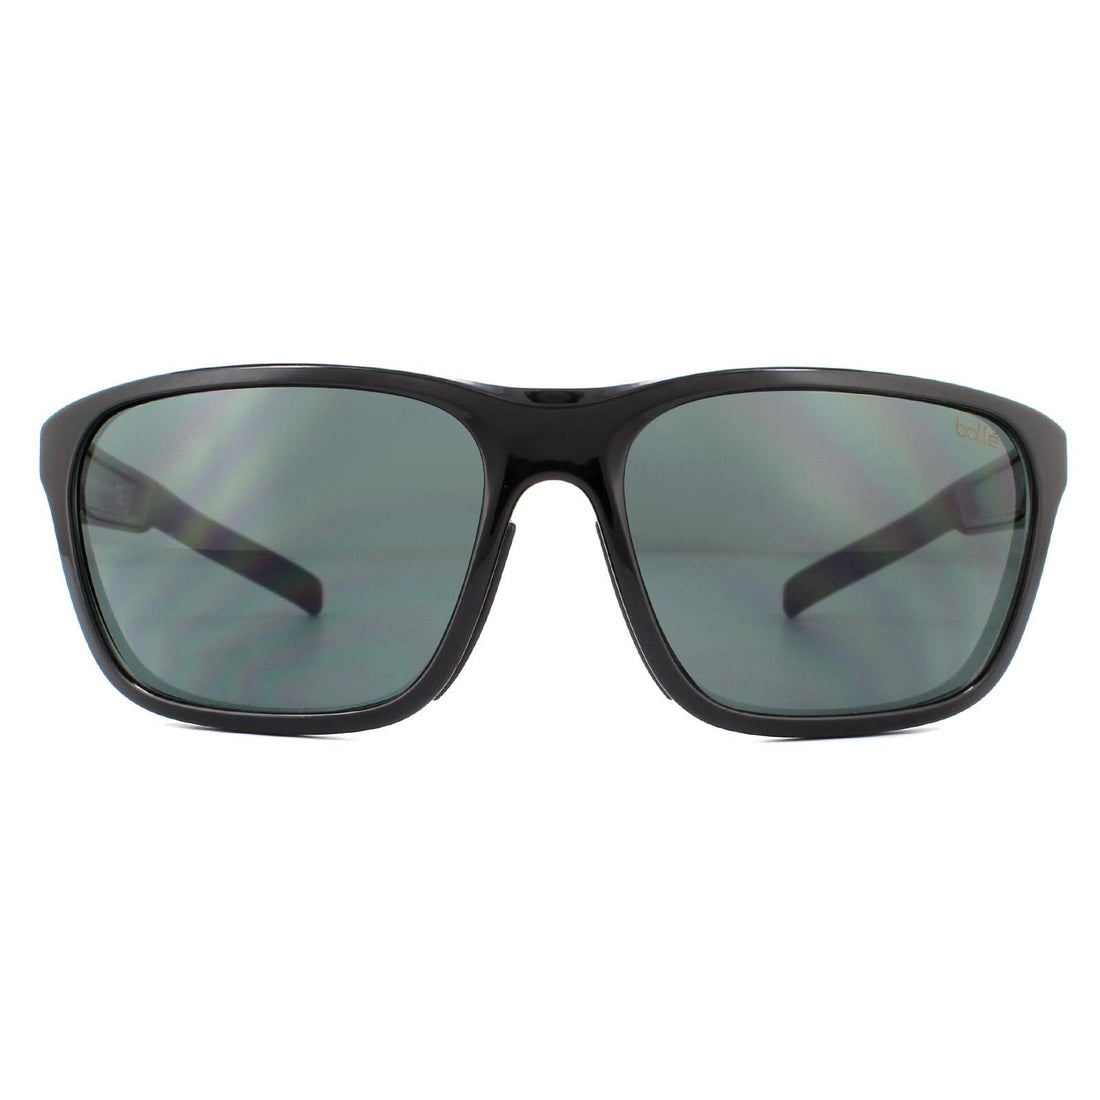 Bolle Sunglasses Strix BS022005 Shiny Black TNS Grey